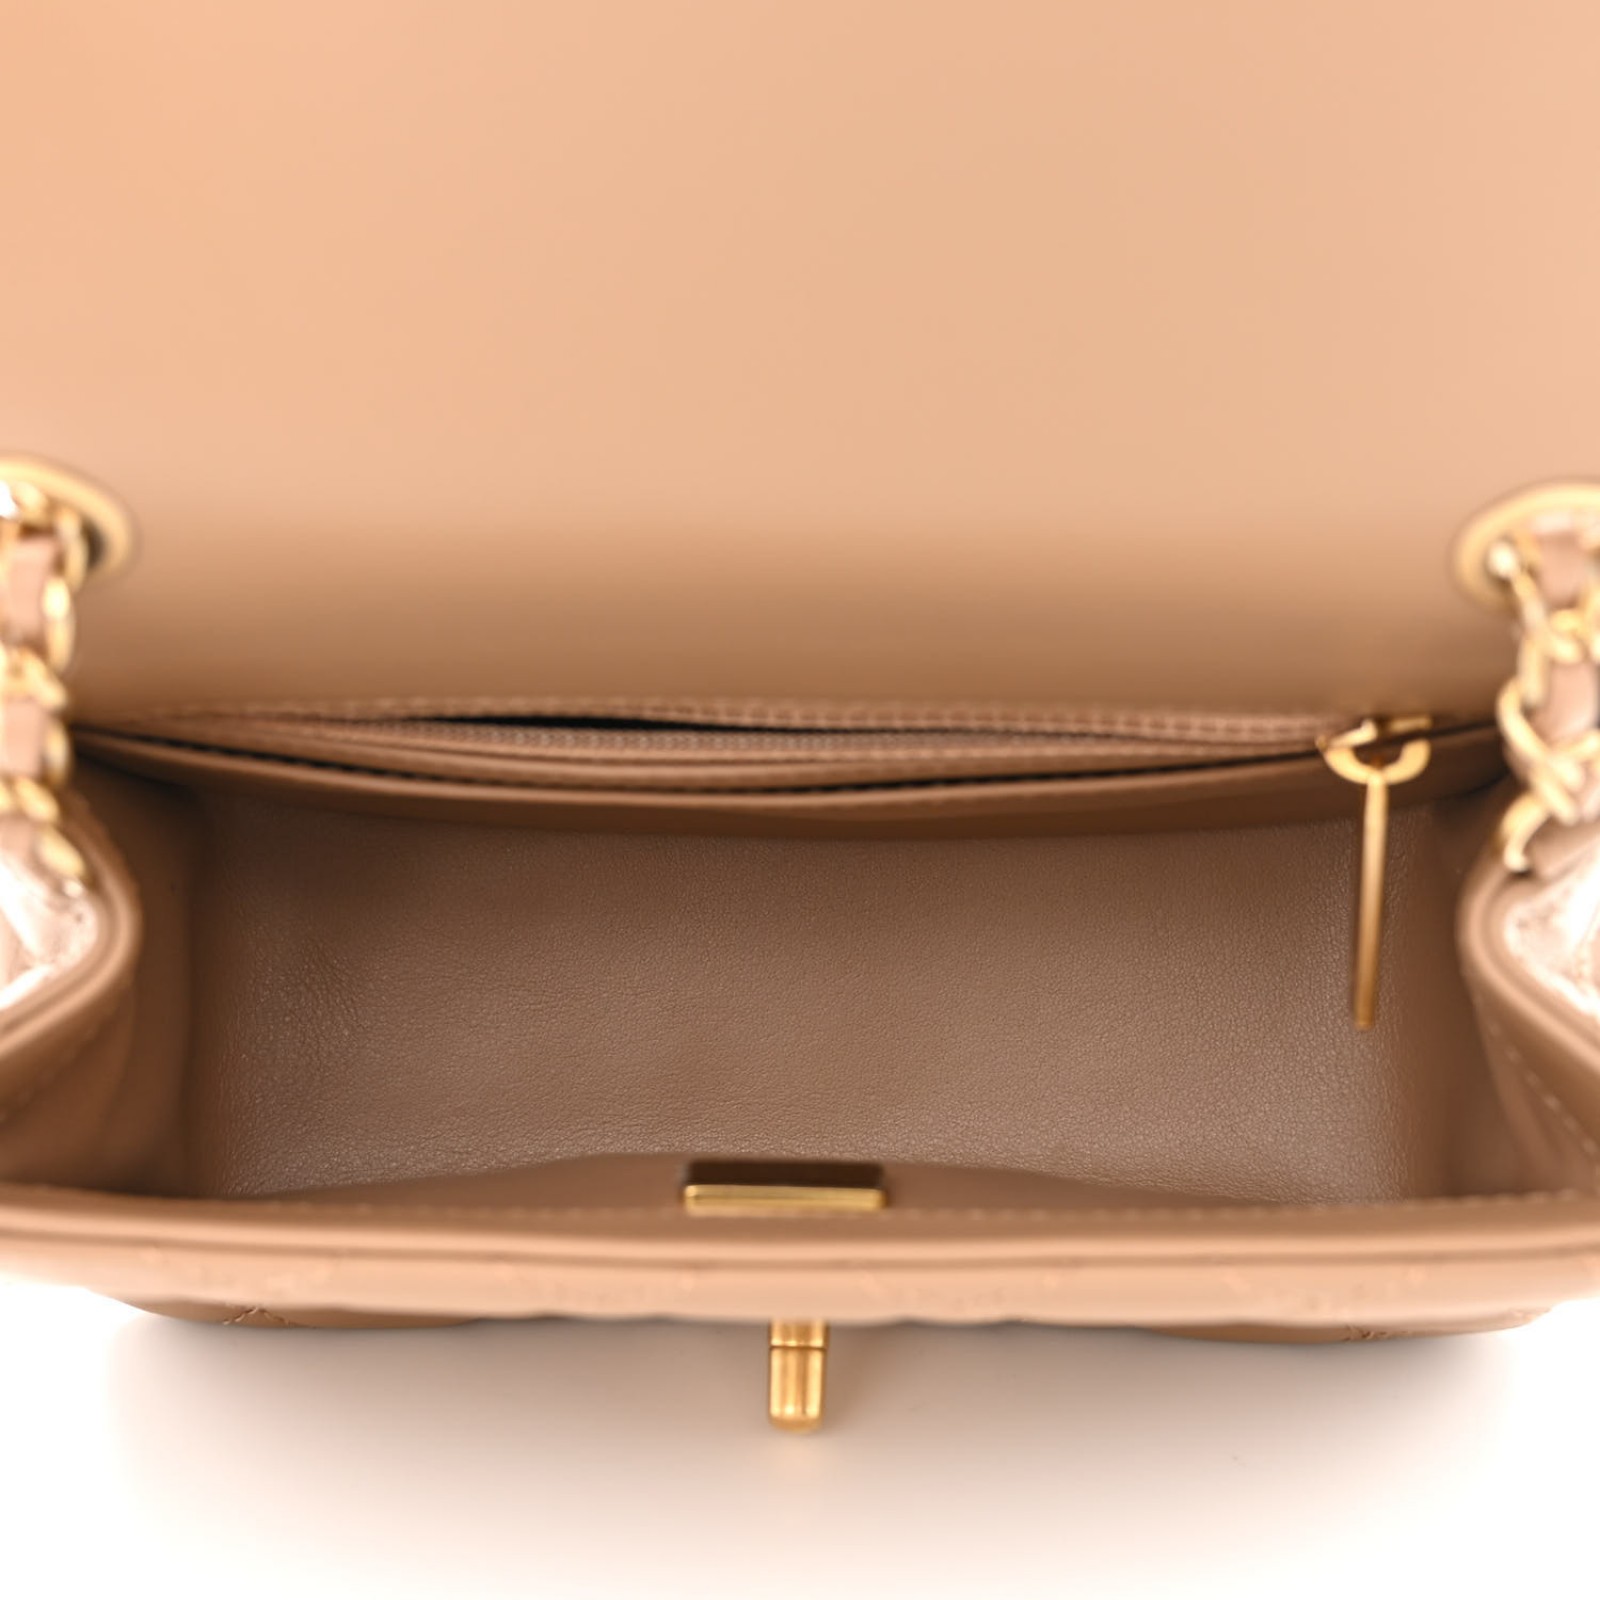 Chanel Pearl Crush Mini Flap Bag